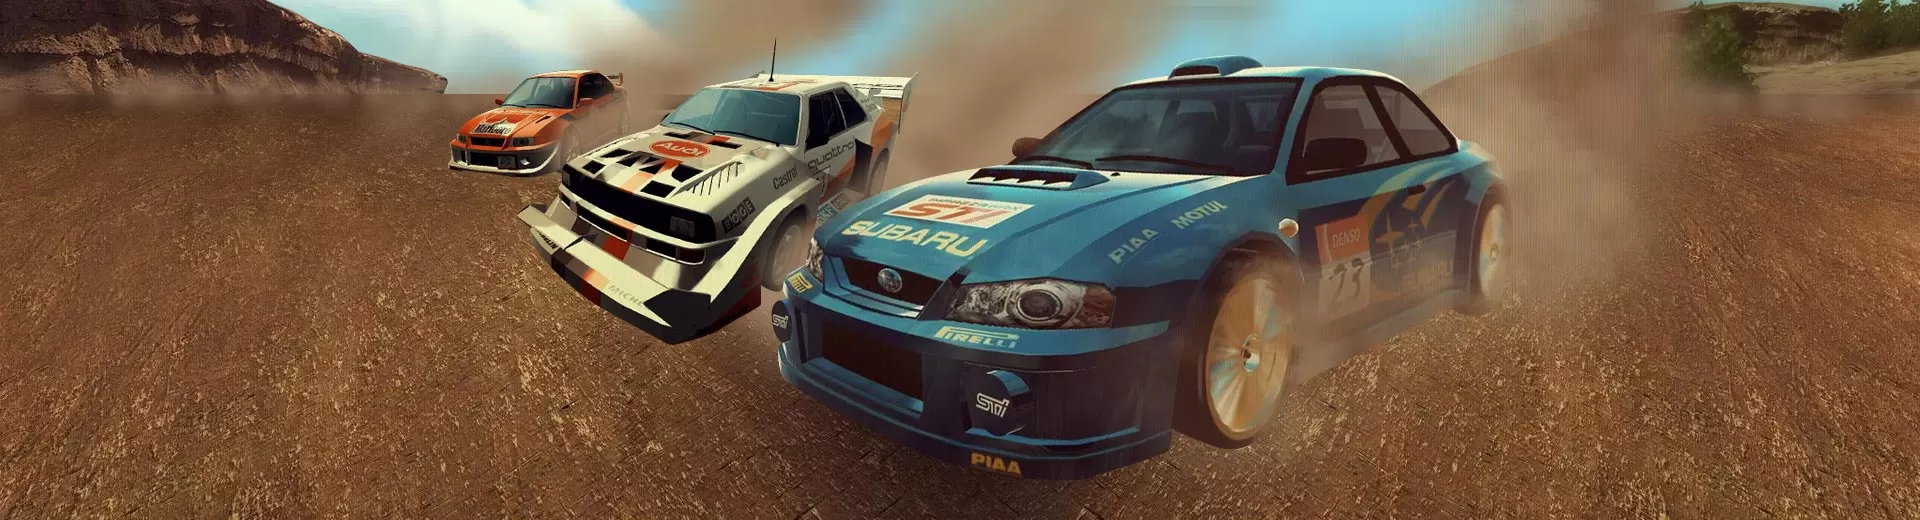 Rally Racer Evo Emulator Pc